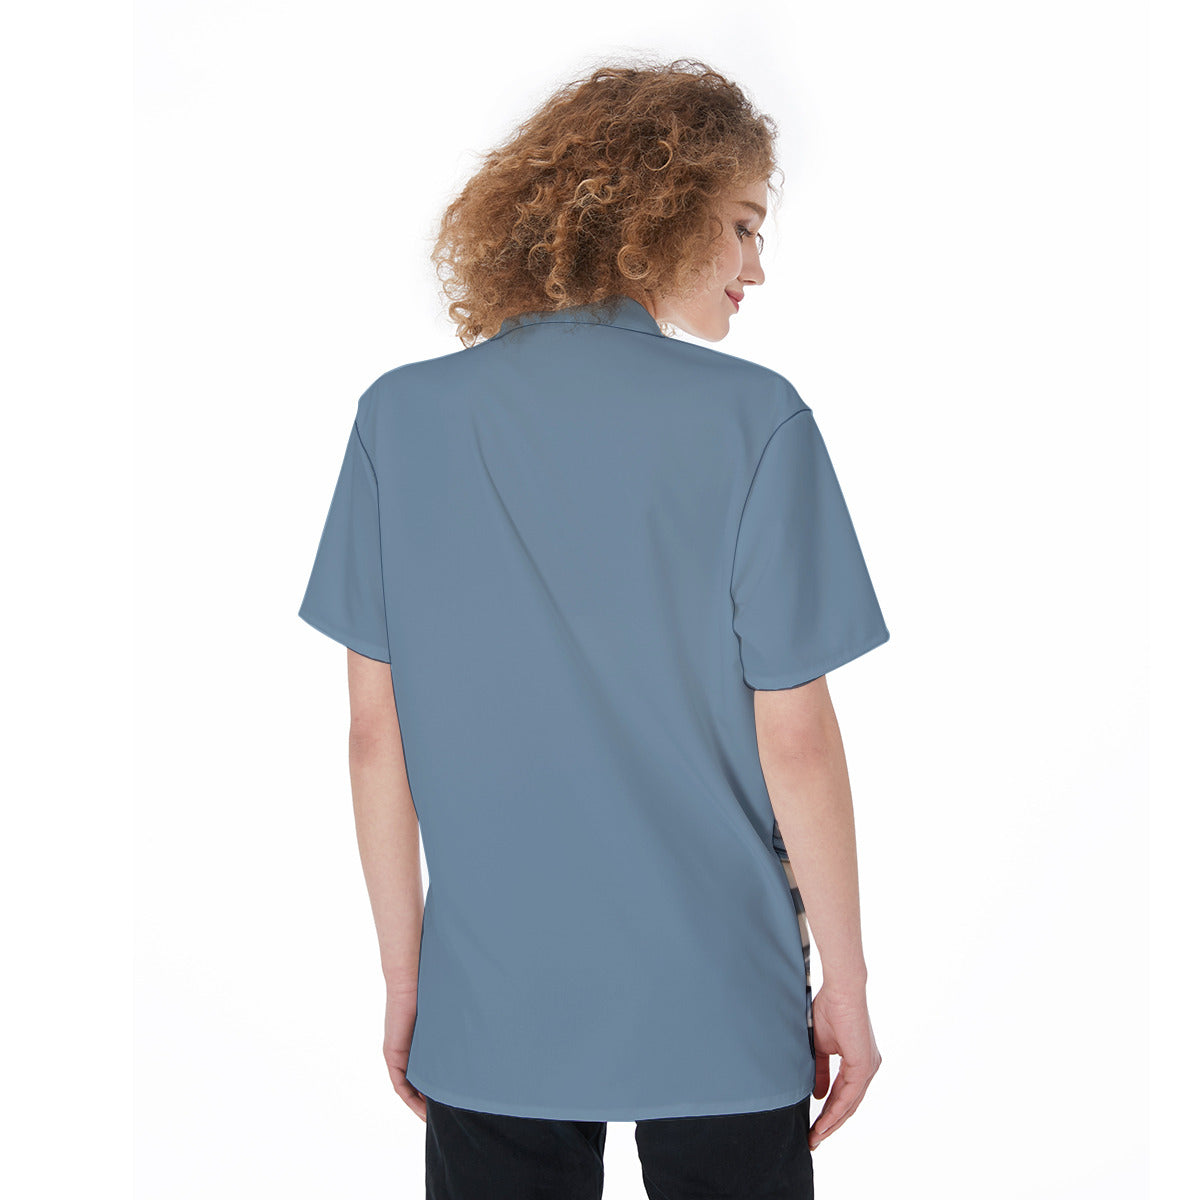 Pattern 207 -- Women's Shirt